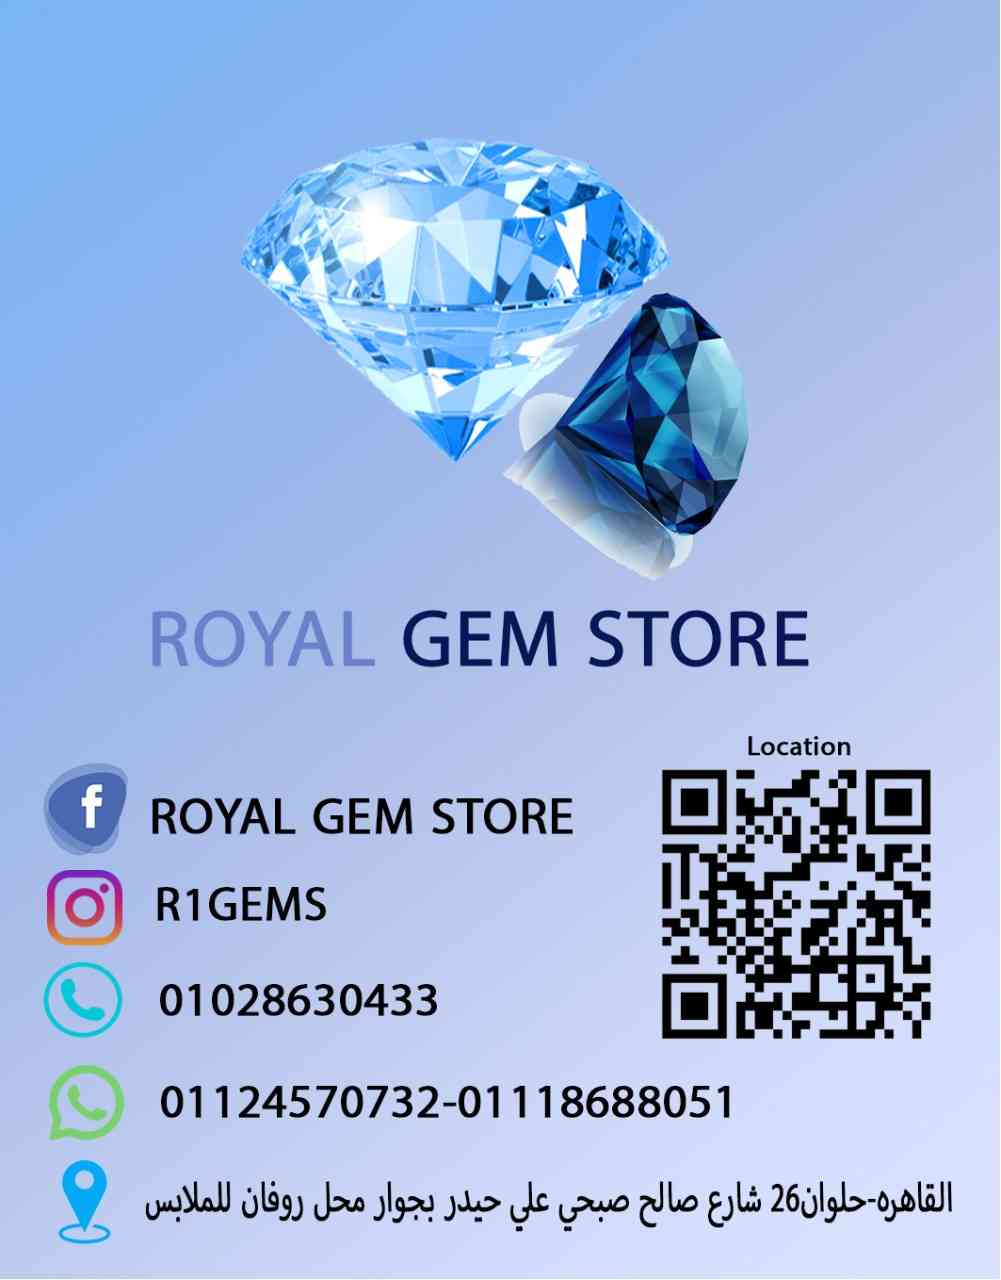 Royal Gem Store